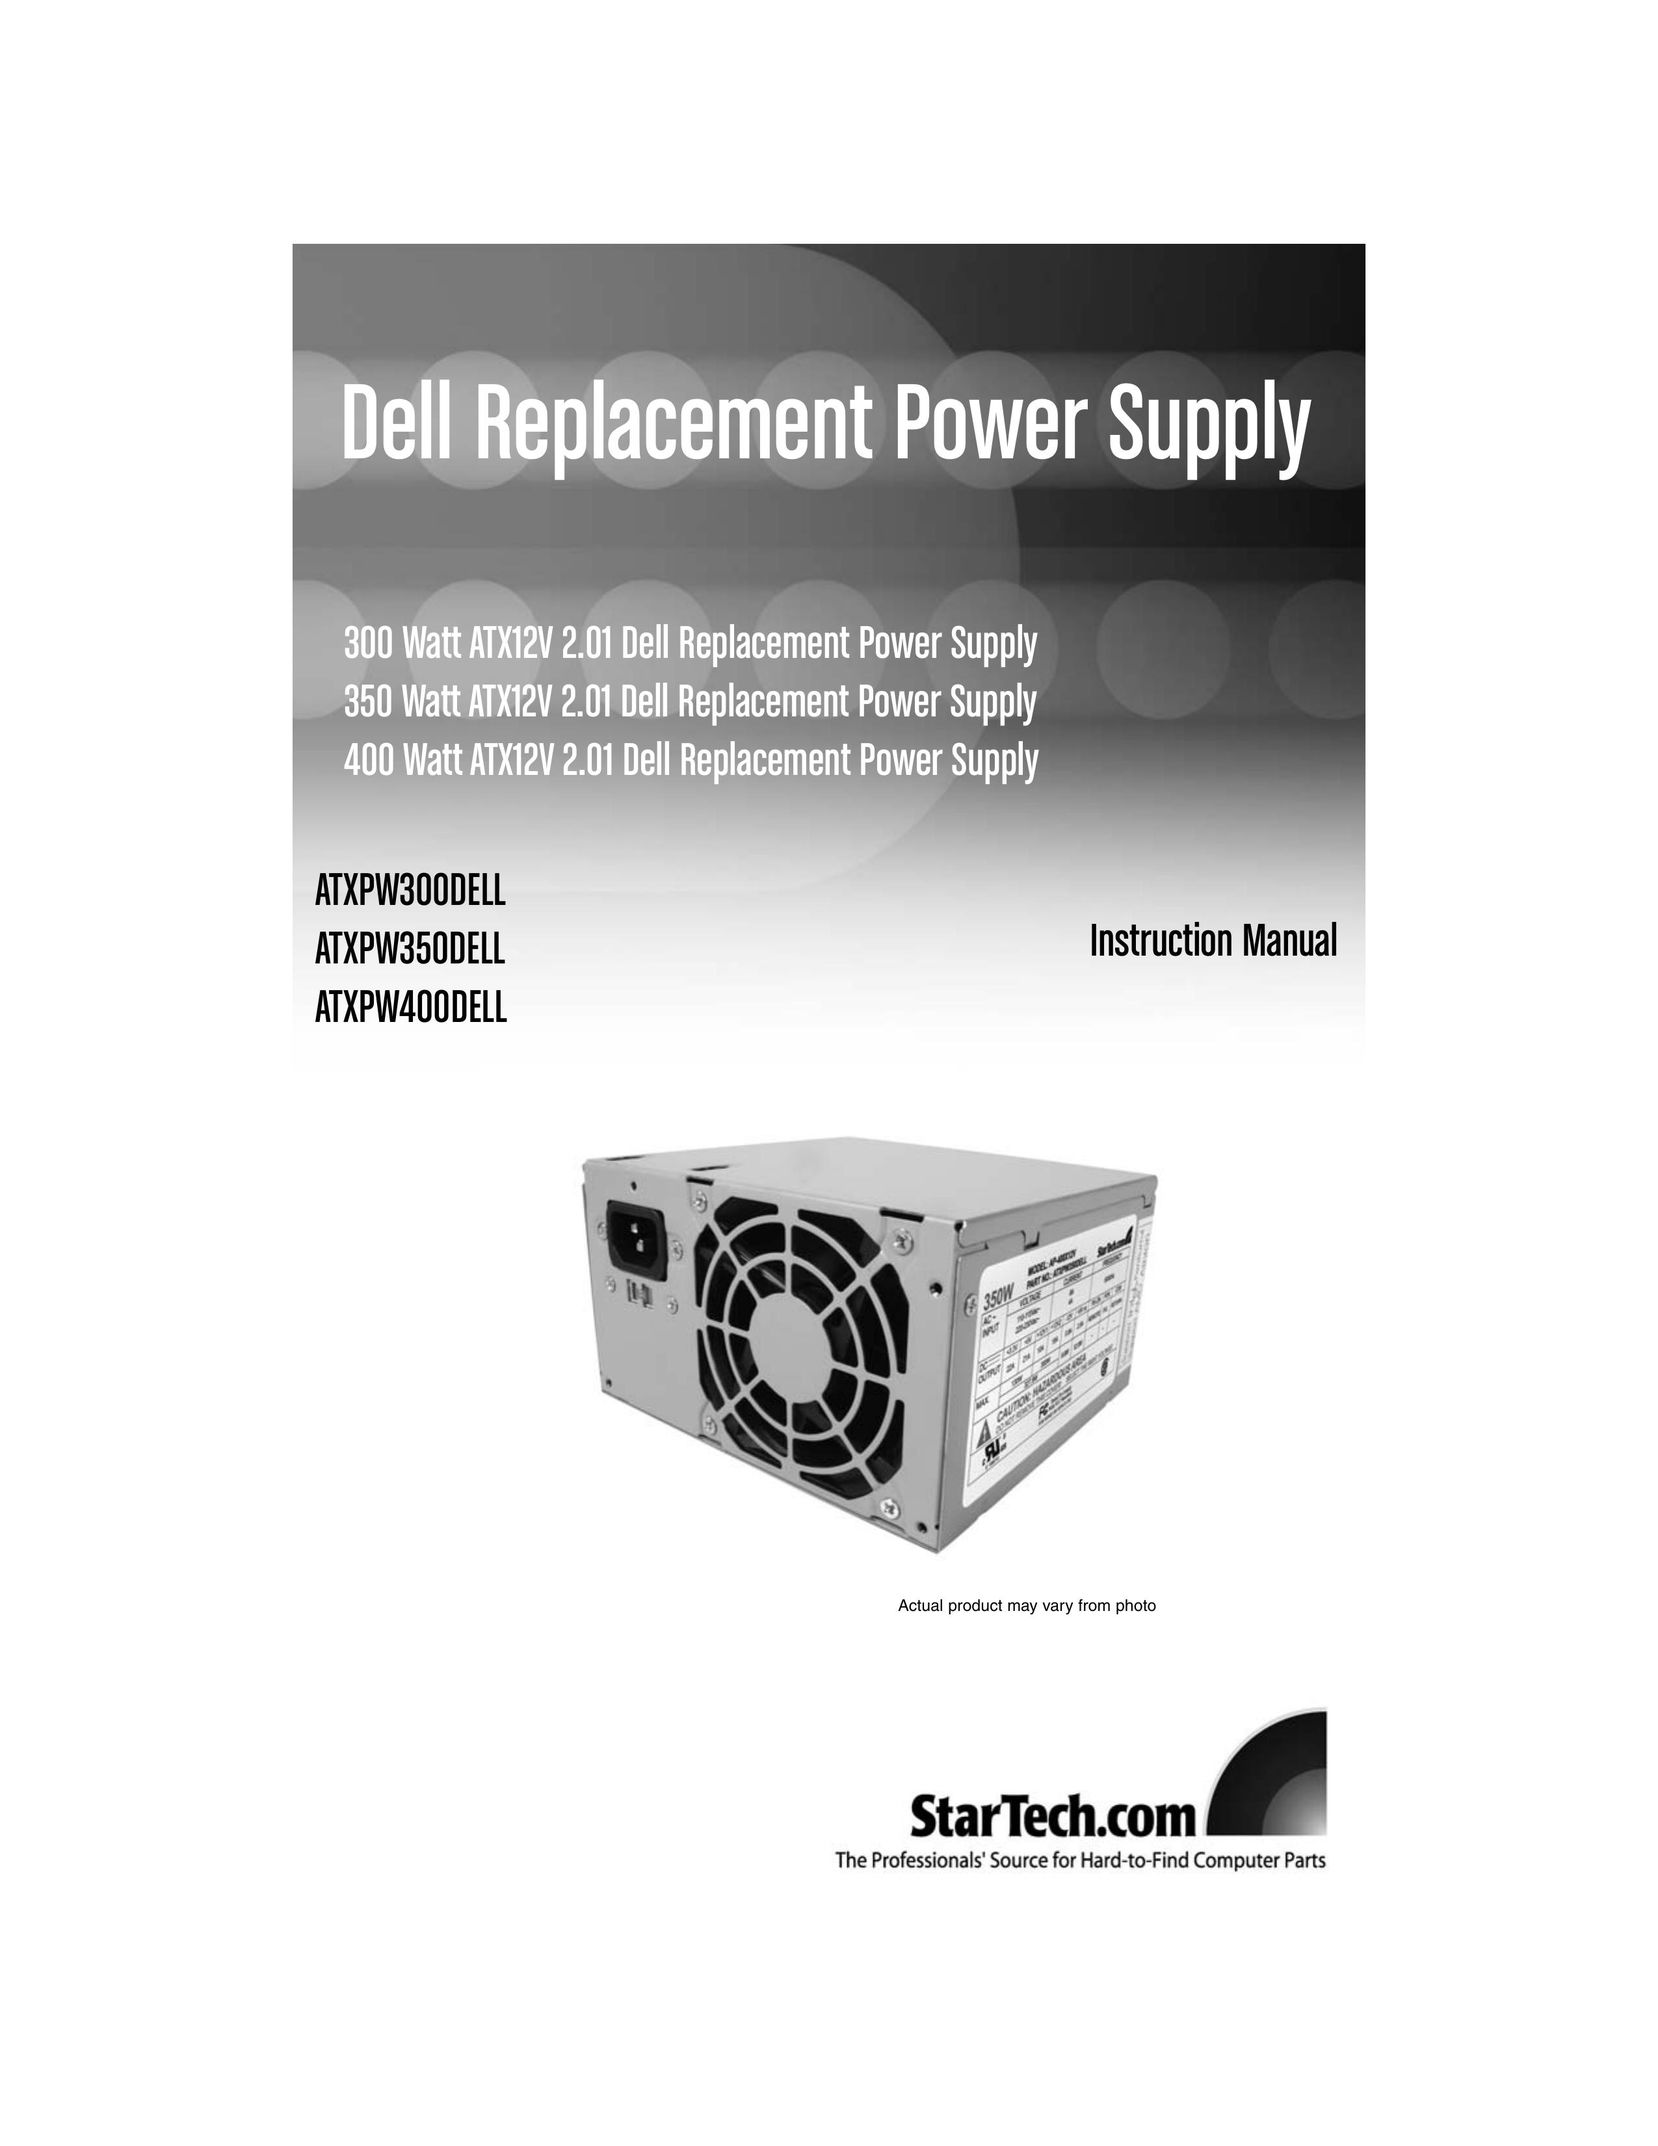 StarTech.com ATXPW300DELL Power Supply User Manual